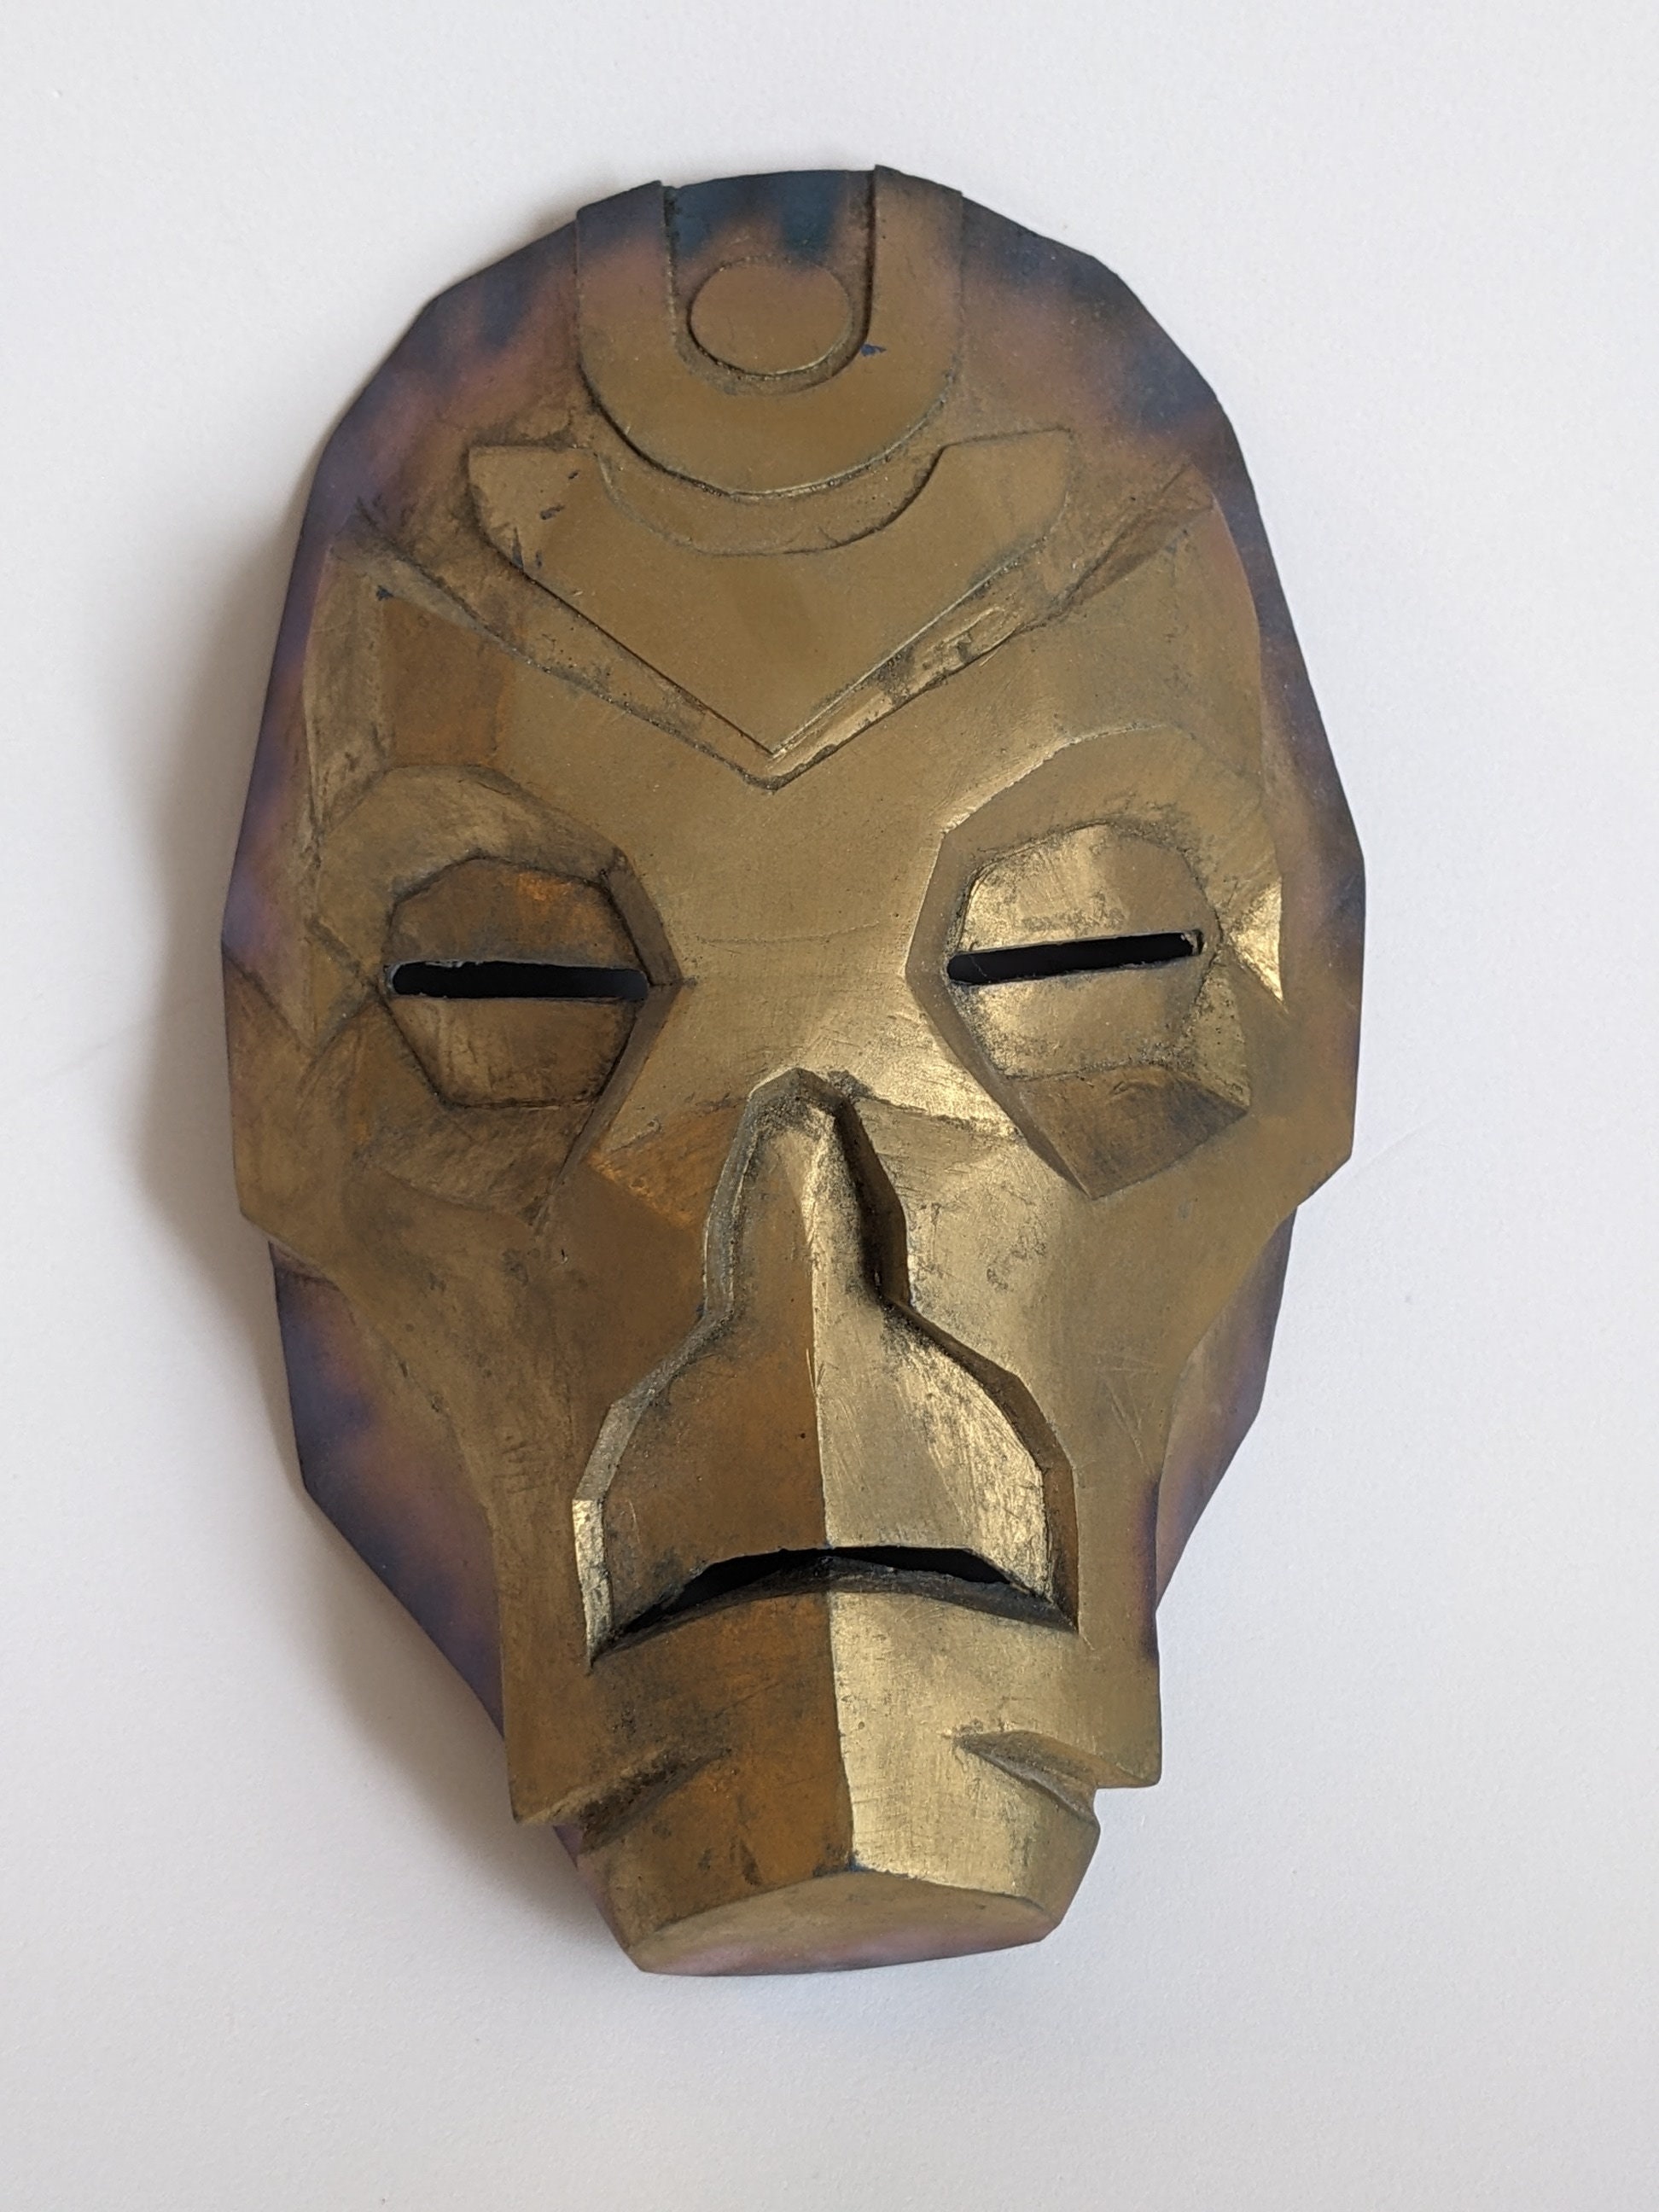 Skyrim 9 Dragon Priest Masks Display 3D Printed, Unofficial. US 